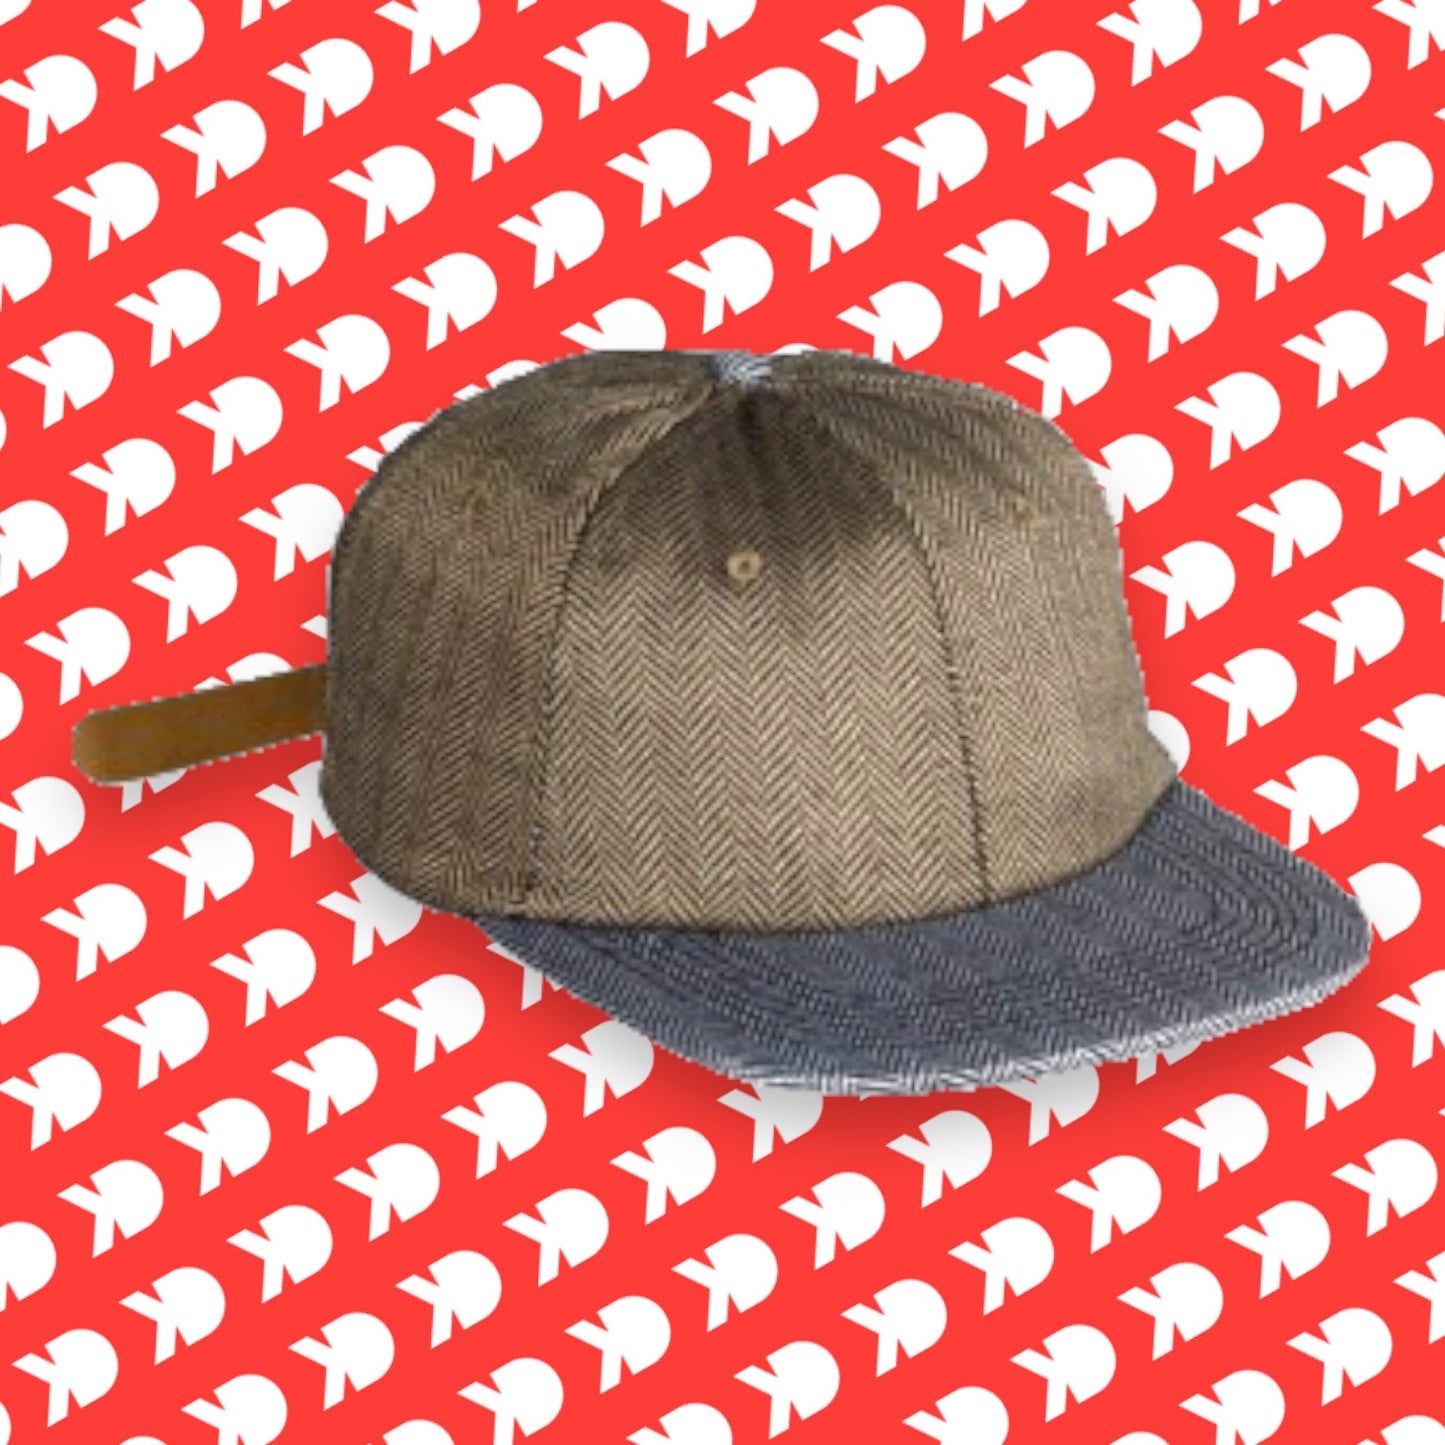 Magenta • brown hat